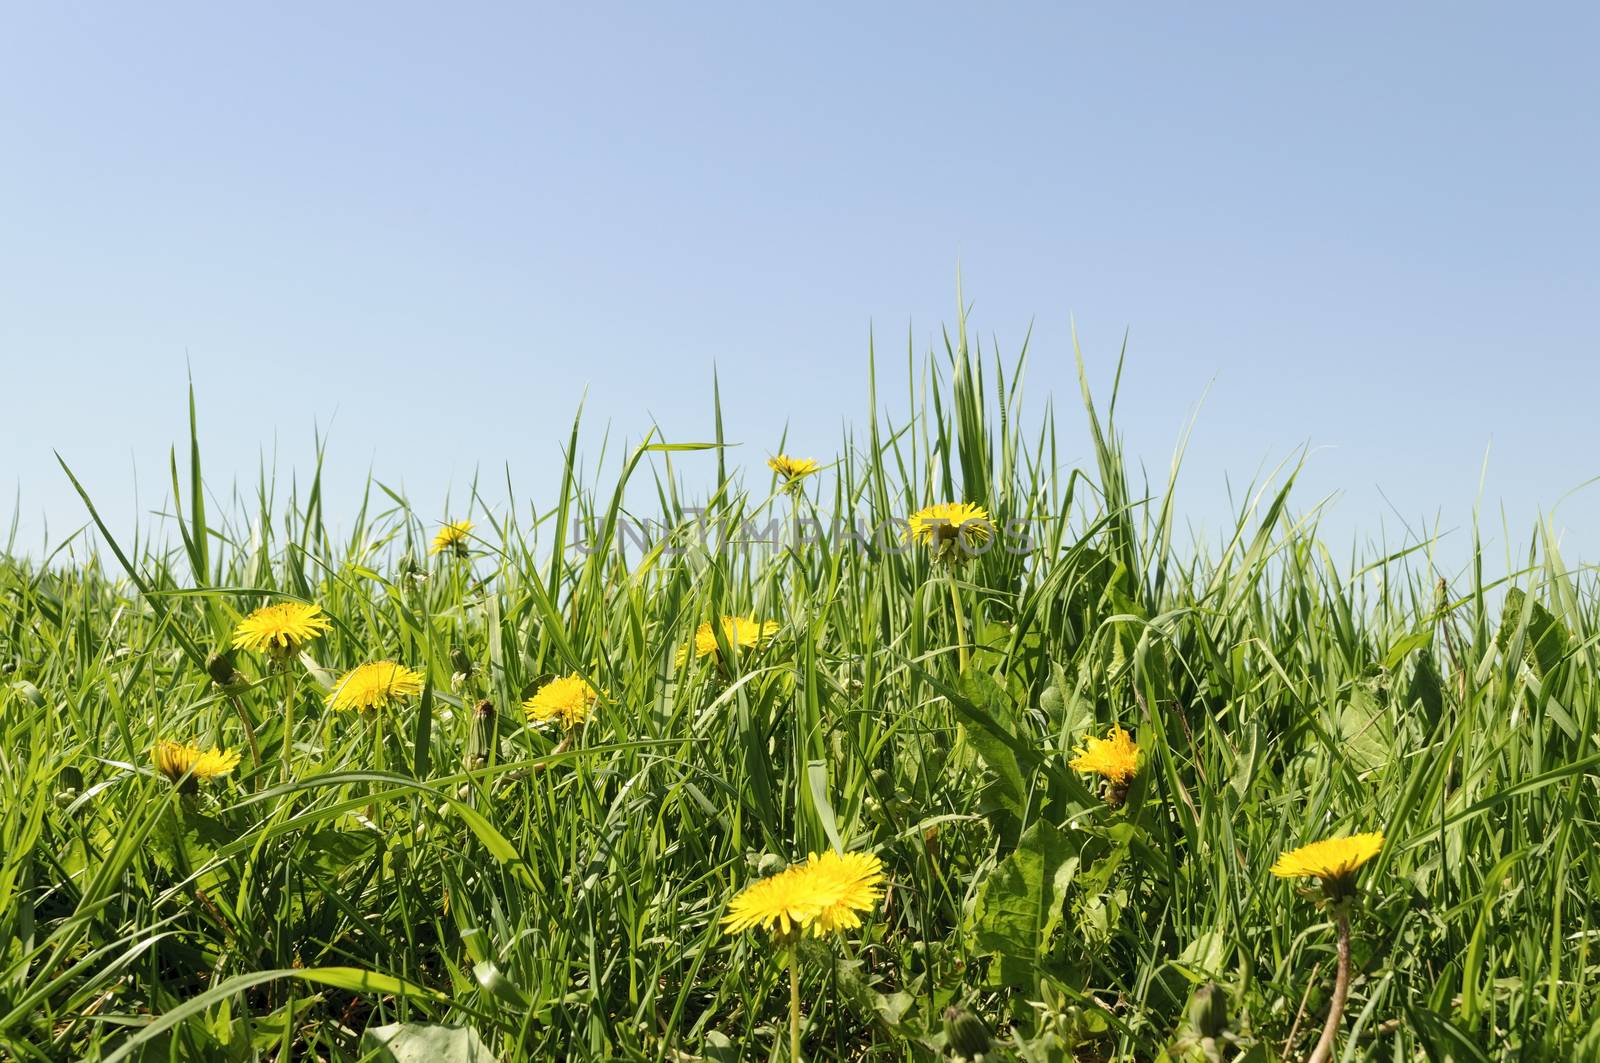 Flowering dandelions in grass by wander